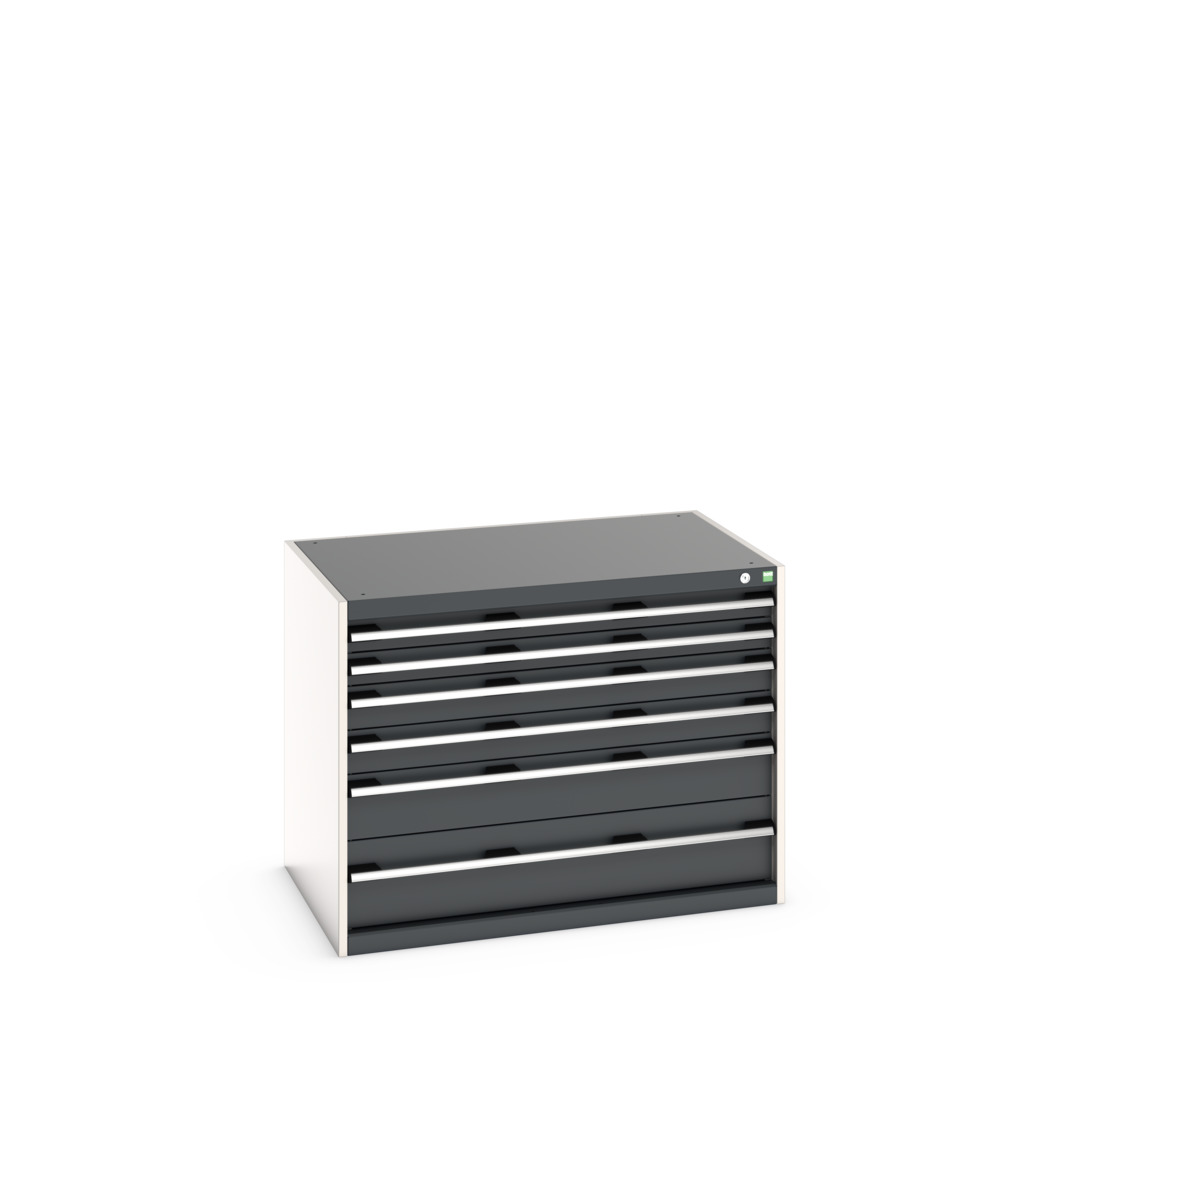 40029085. - cubio drawer cabinet